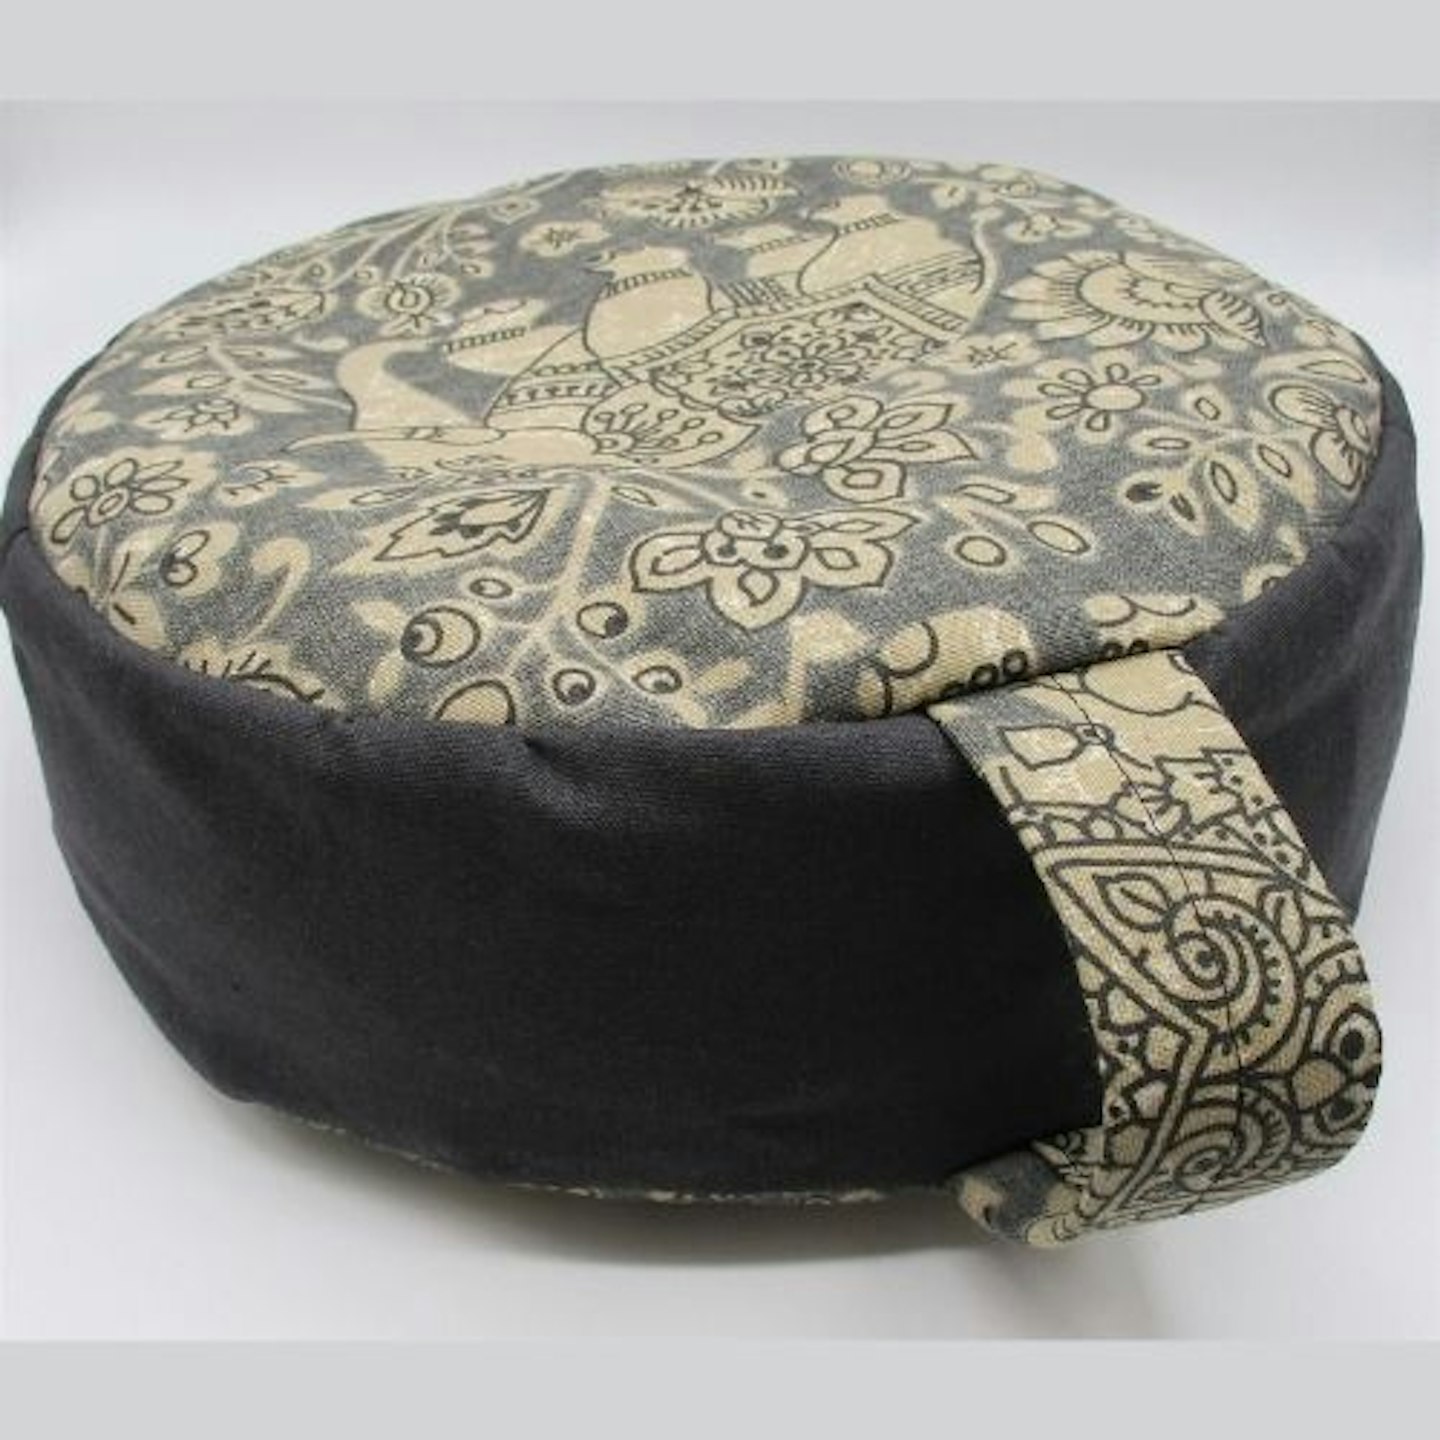 Charcoal Elephant Meditation Cushion